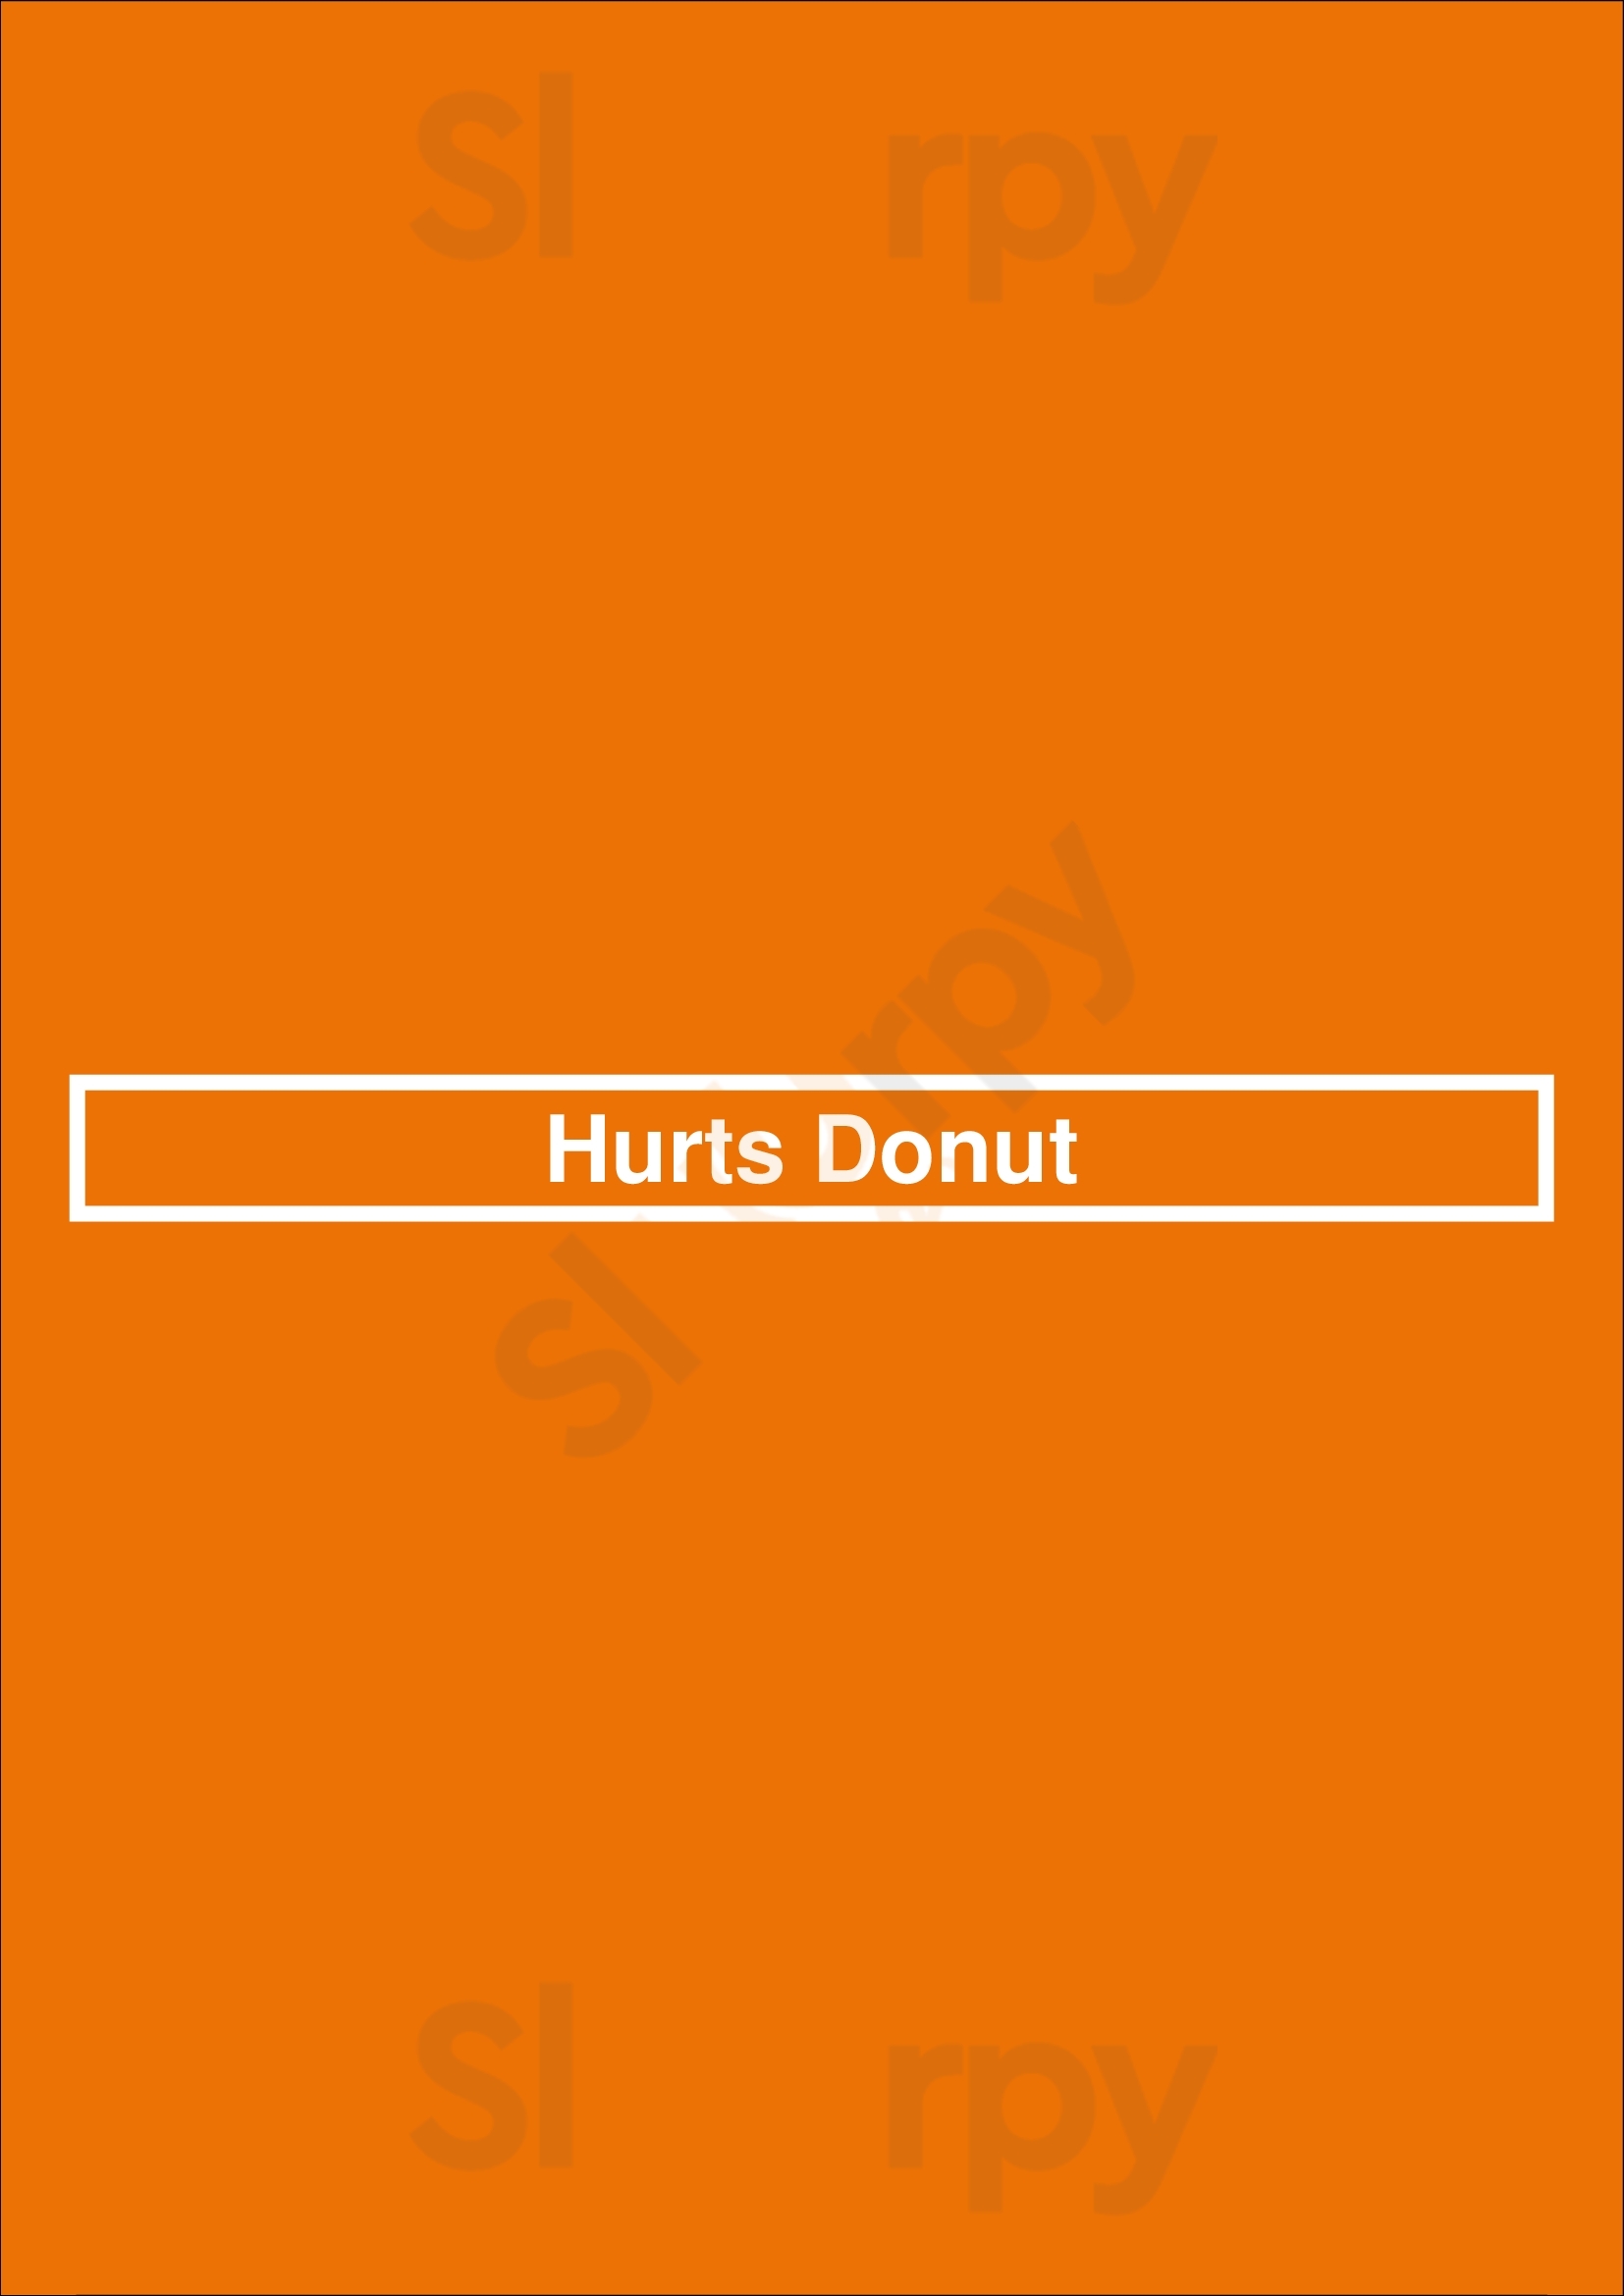 Hurts Donut Oklahoma City Menu - 1